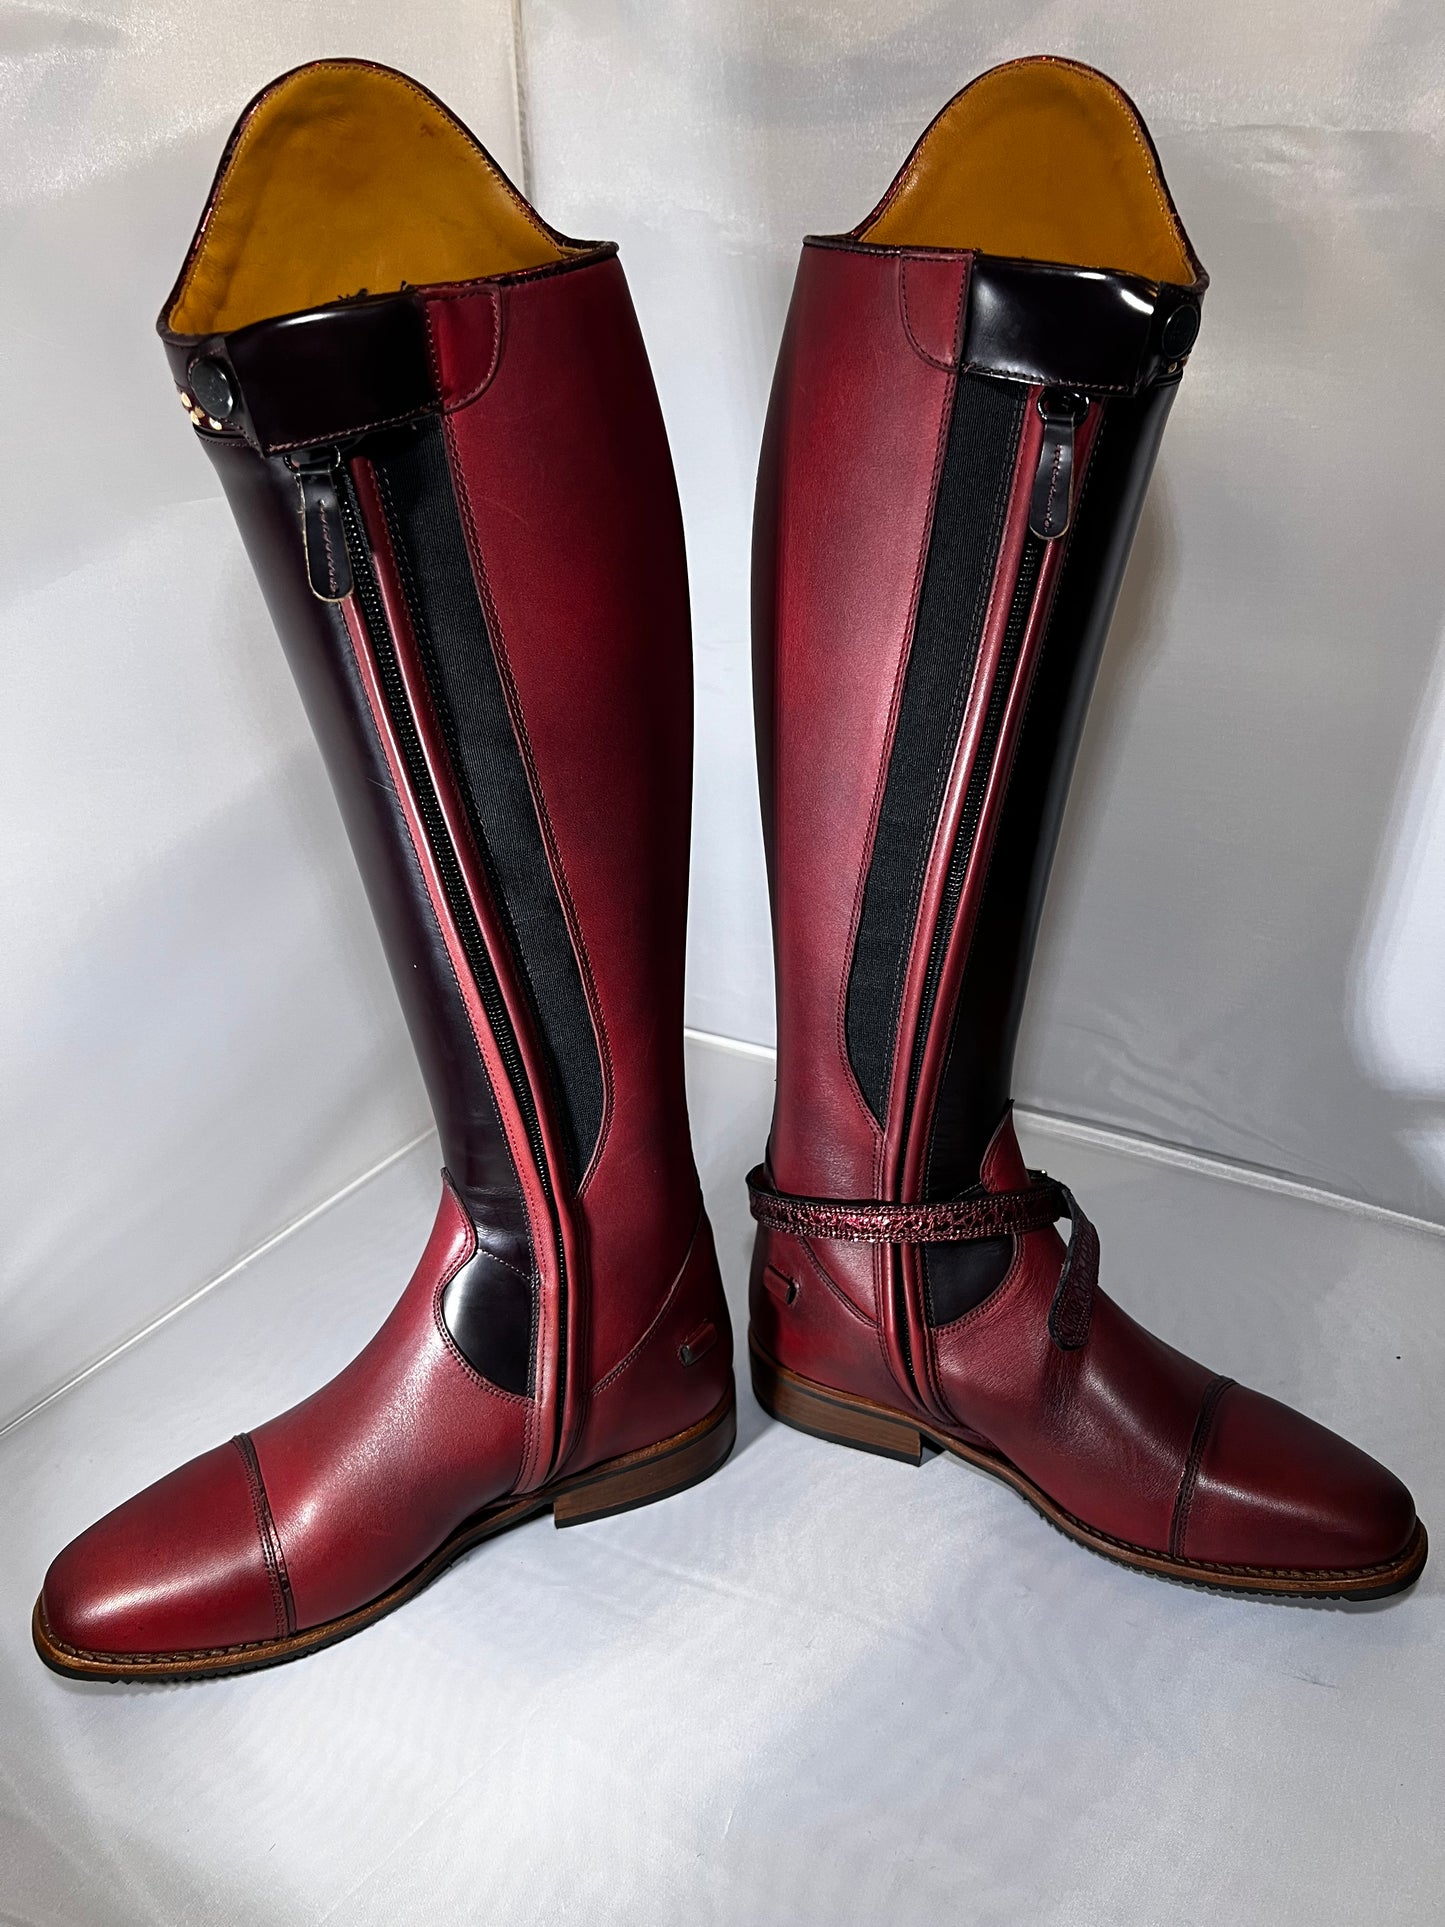 Deniro Tiziano Custom Dressage Boots- Consignment Pair